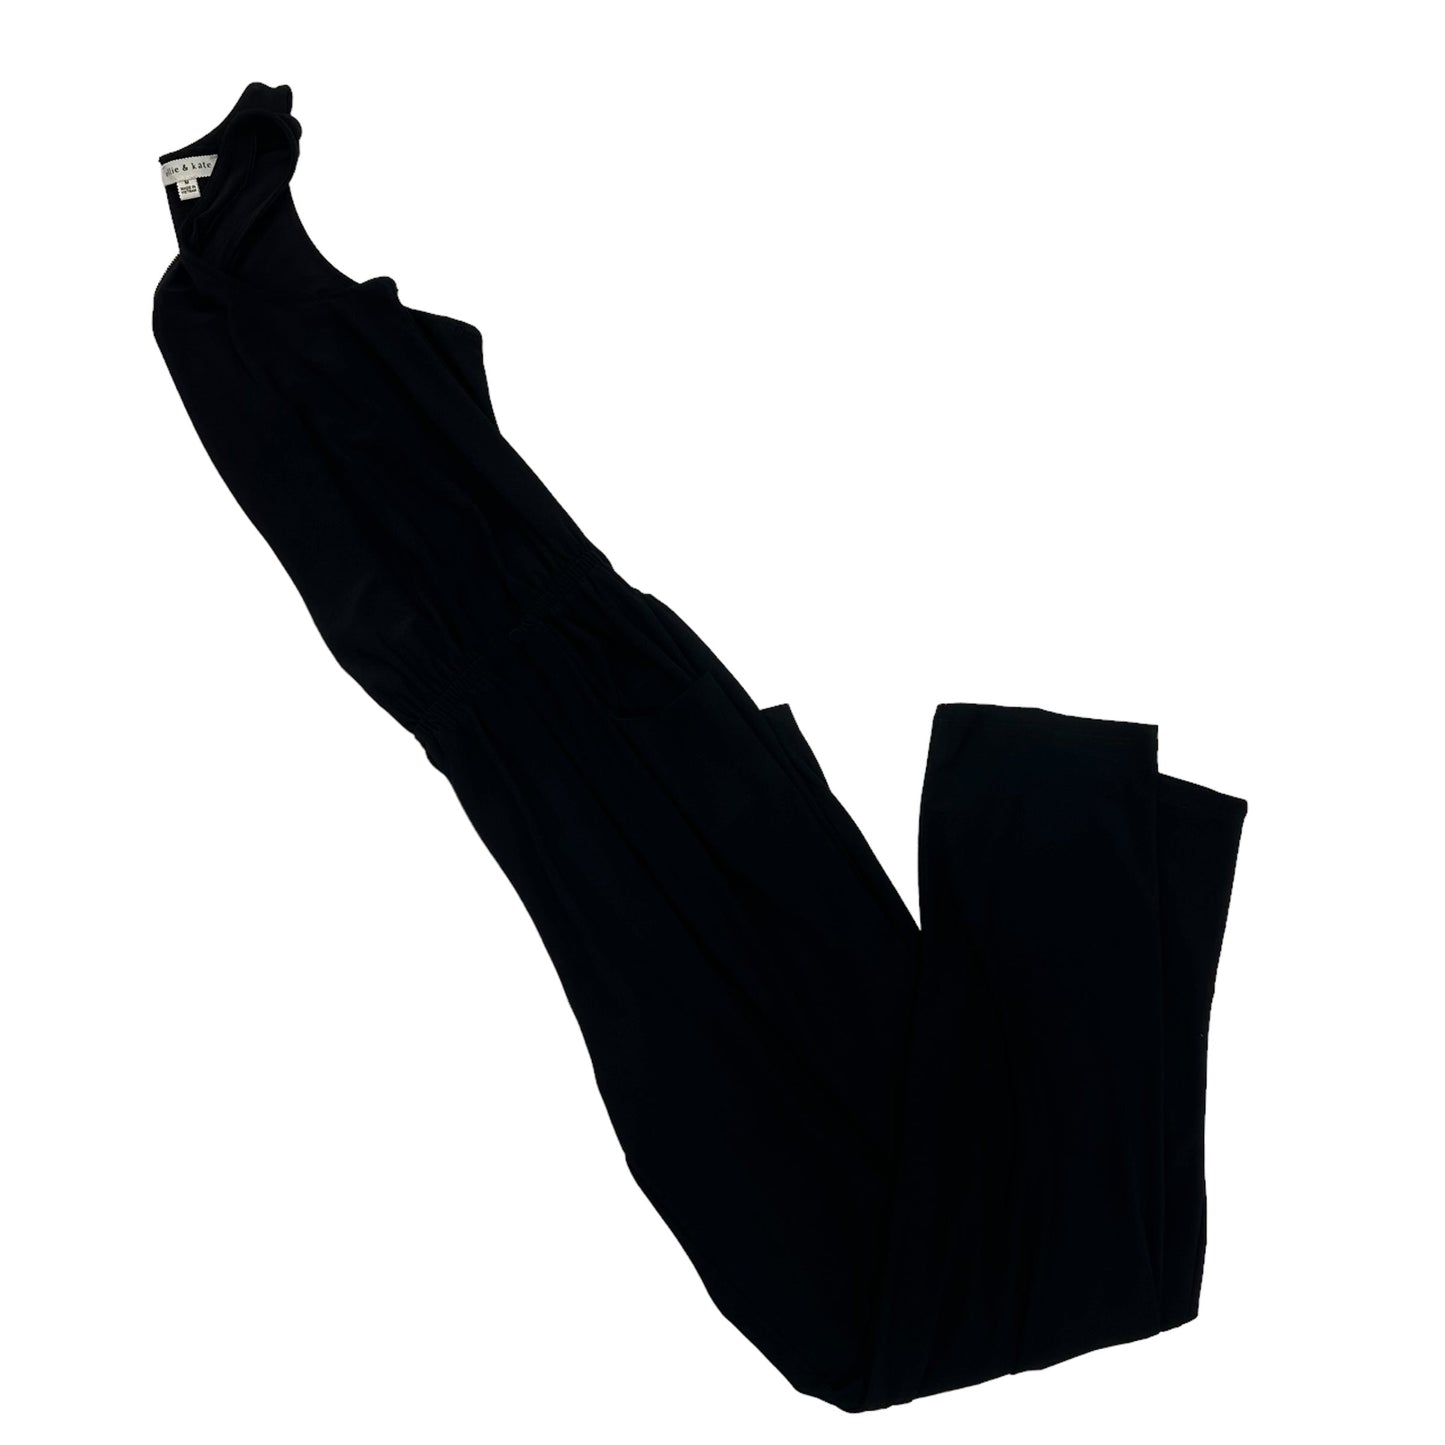 BLACK JUMPSUIT by CLOTHES MENTOR Size:M